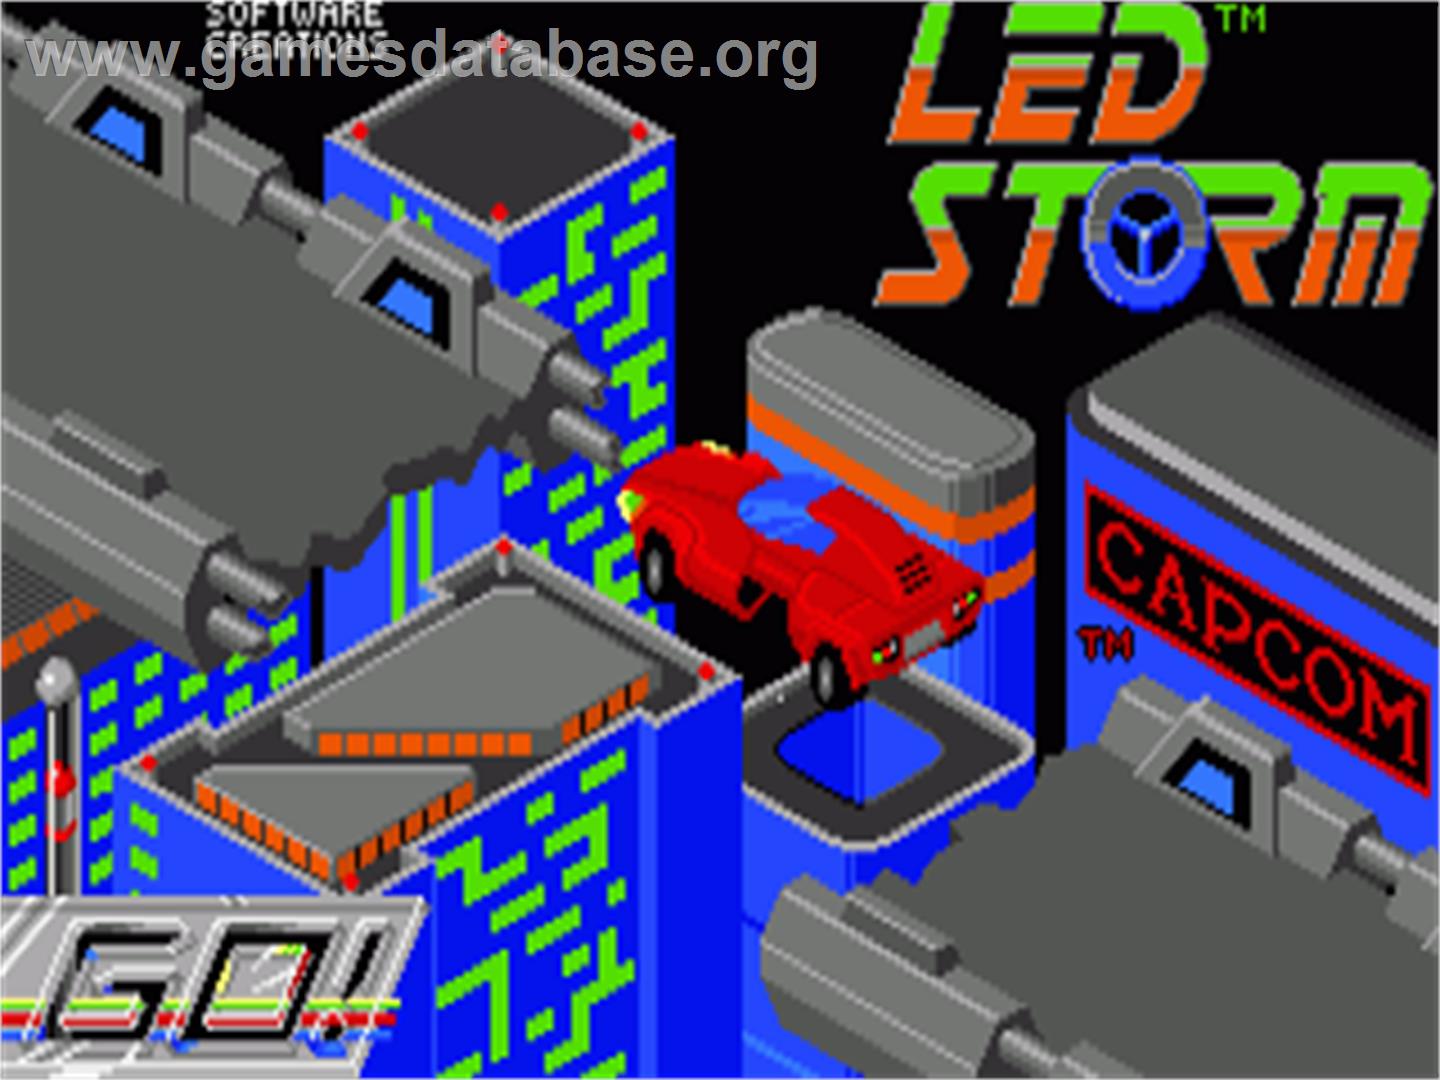 Led Storm - Commodore Amiga - Artwork - Title Screen